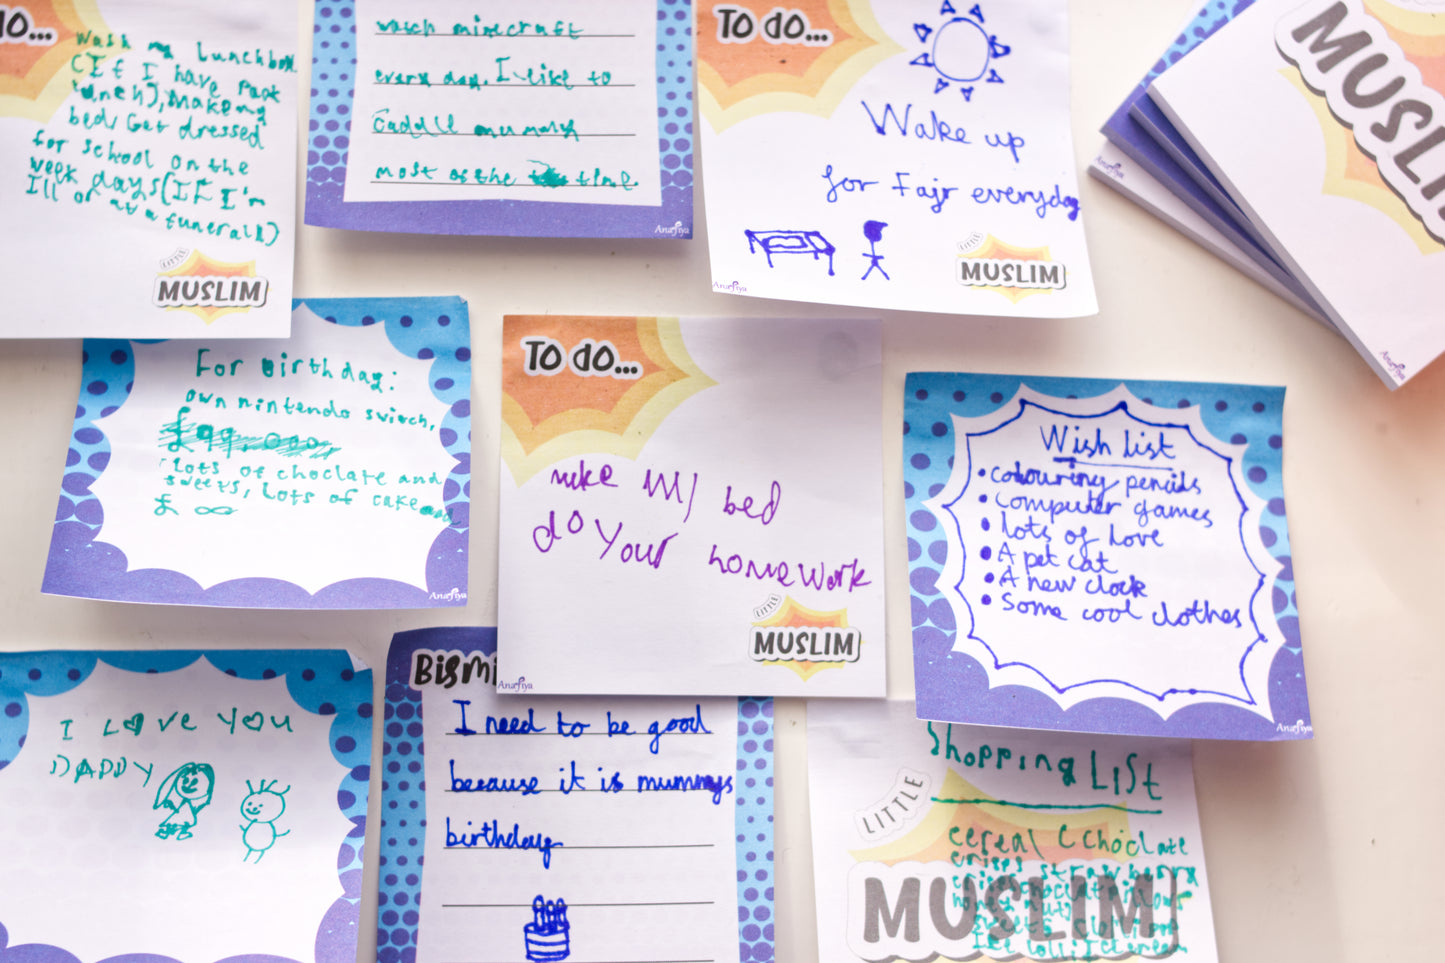 Little Muslim Post-it Notes